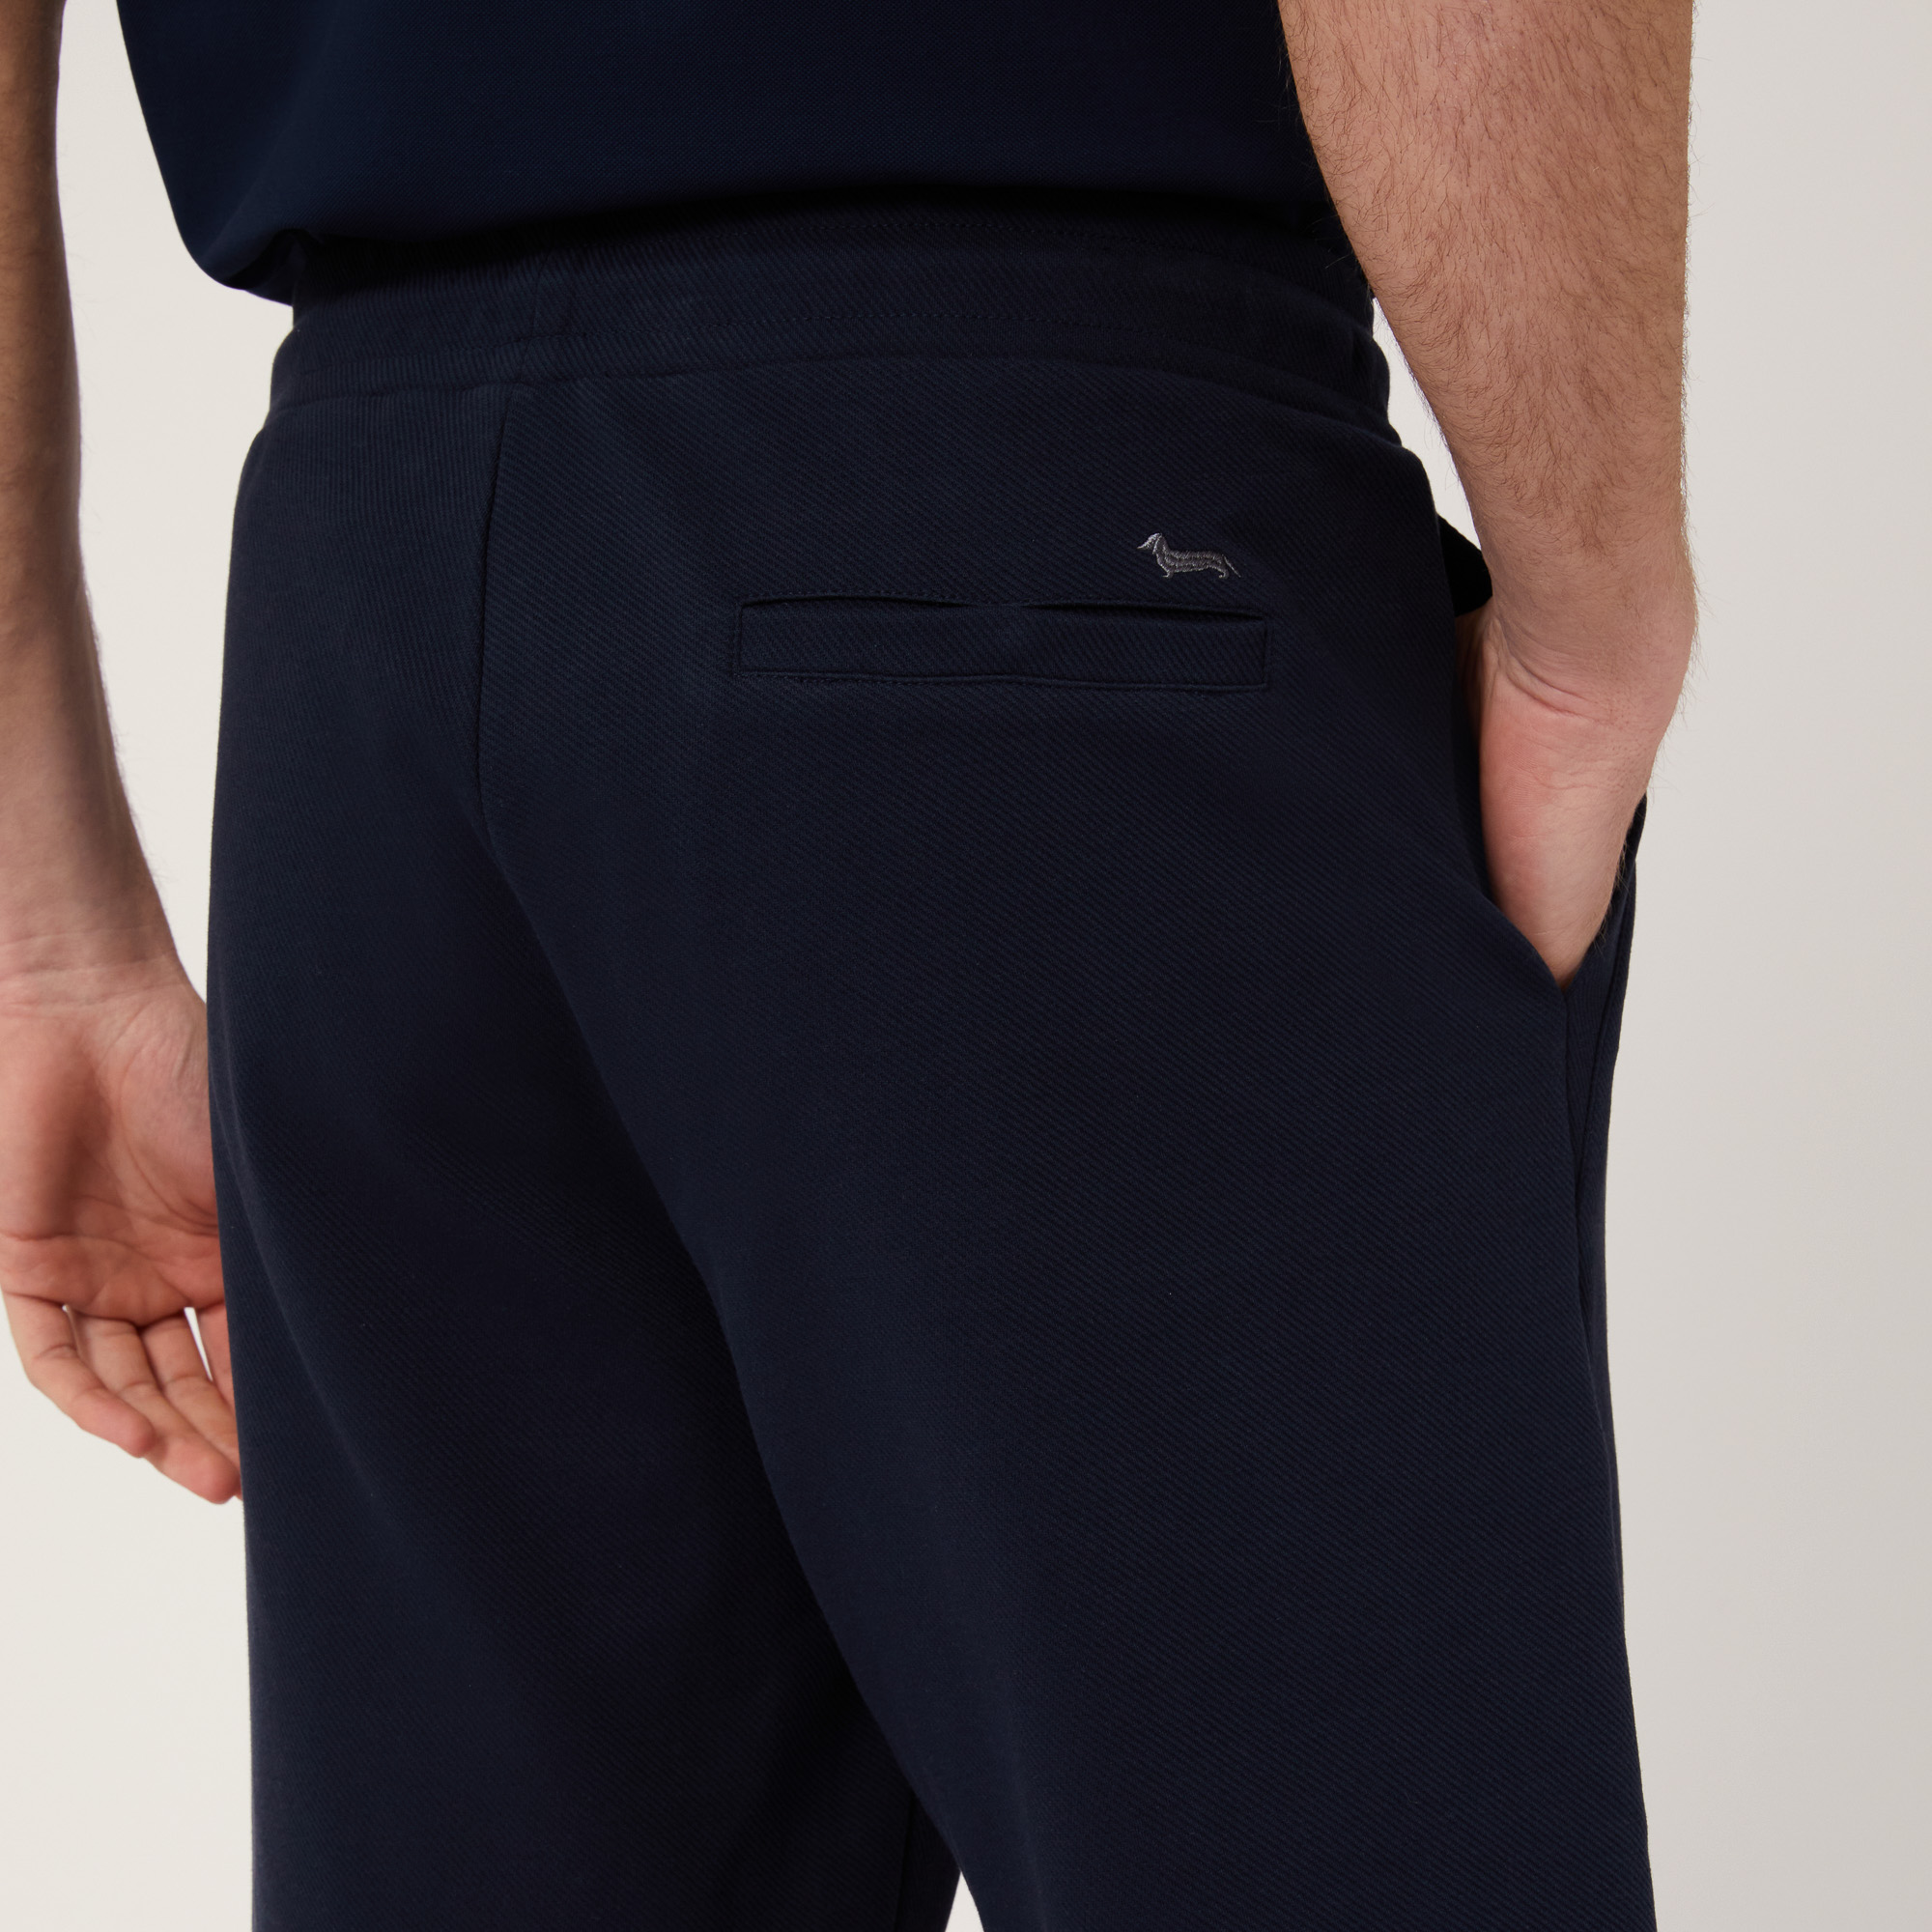 Pantalón corto de algodón elástico con bolsillo trasero, Azul, large image number 2